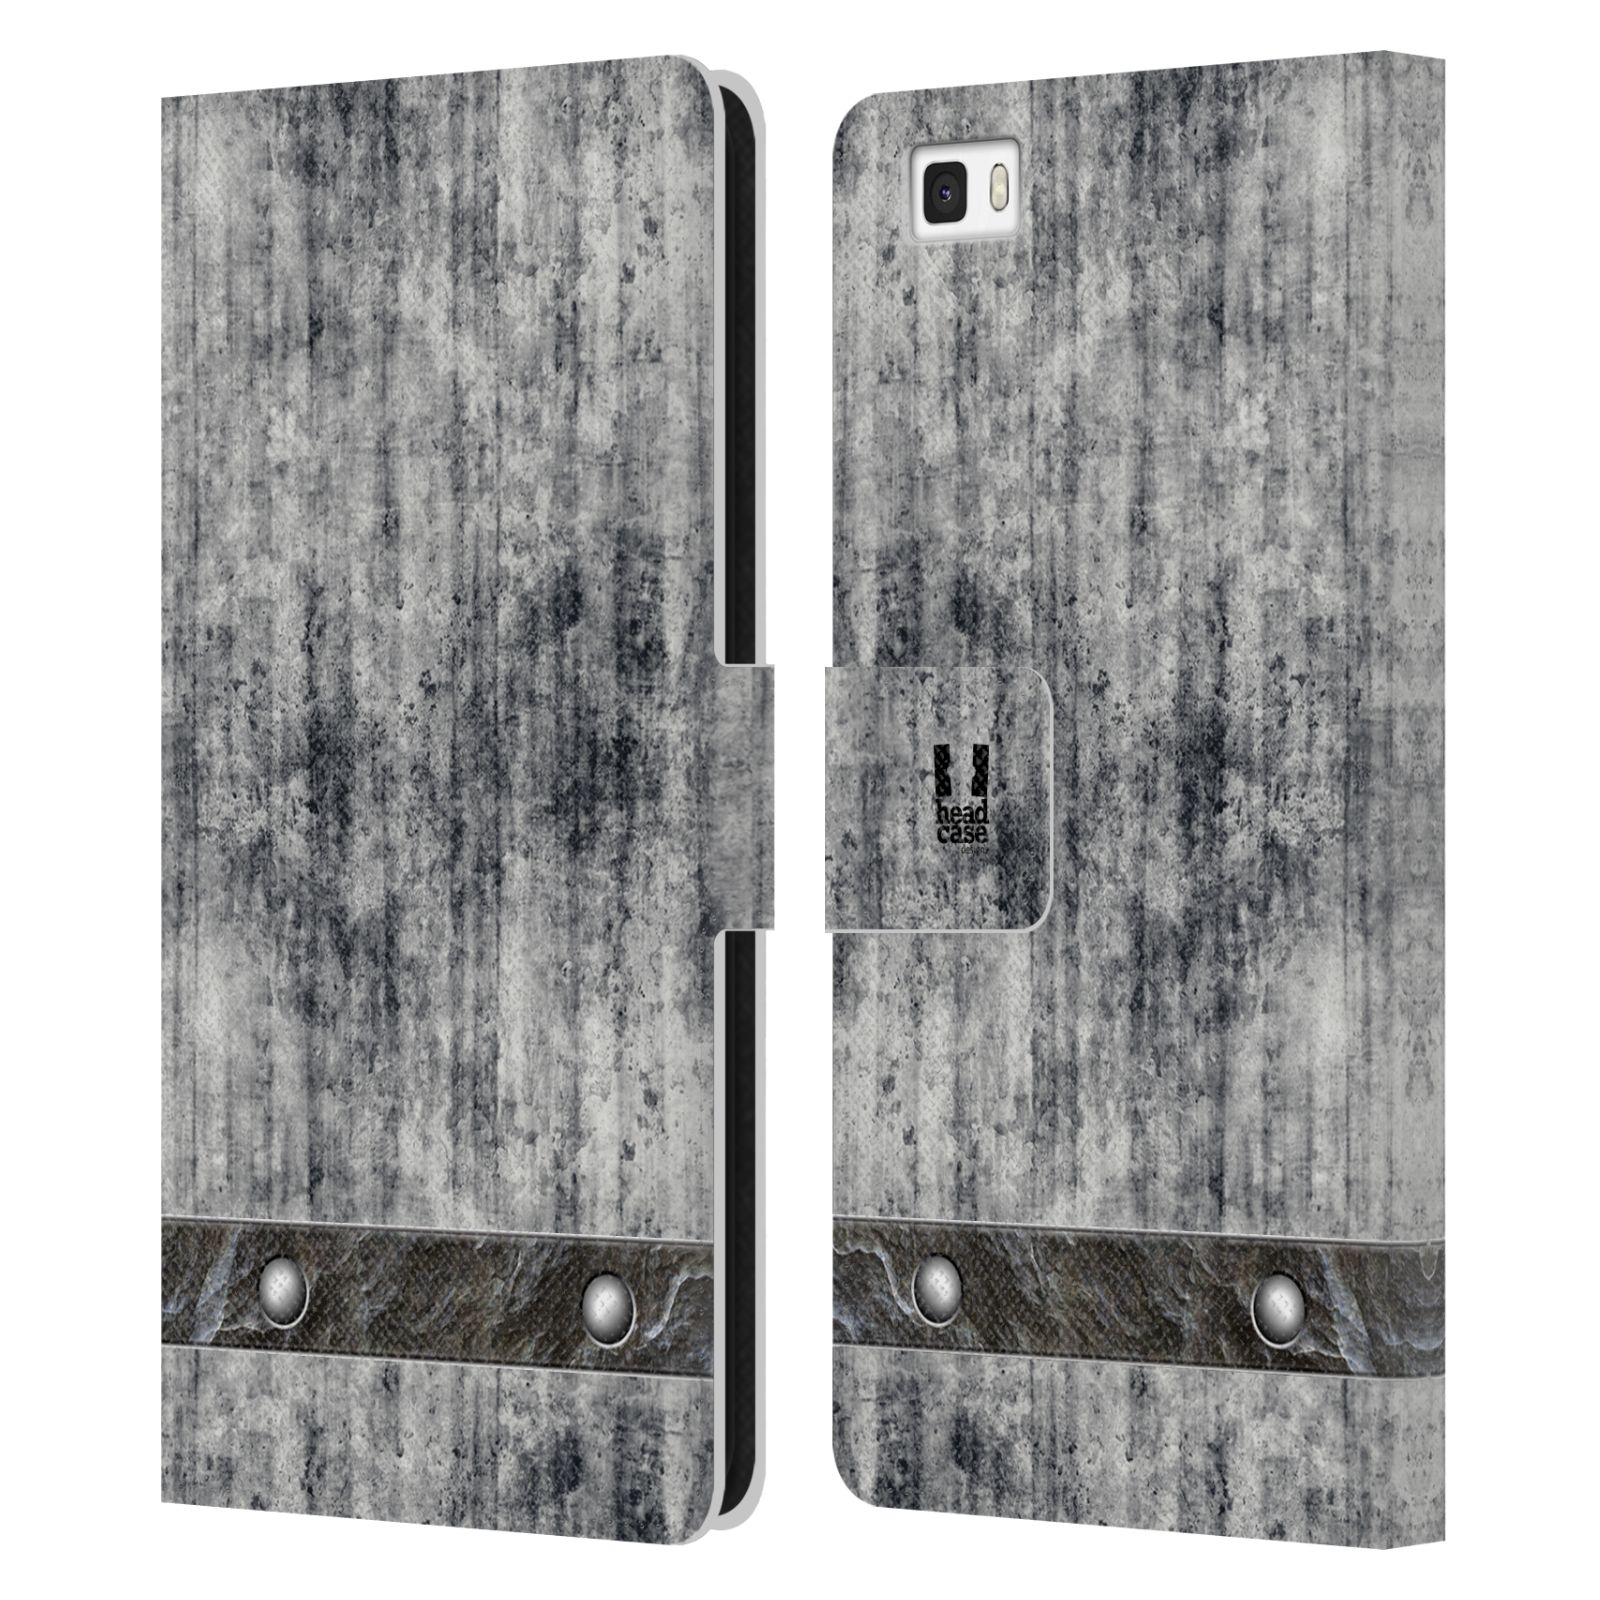 Pouzdro pro mobil Huawei P8 LITE - Stavební textura šedý beton